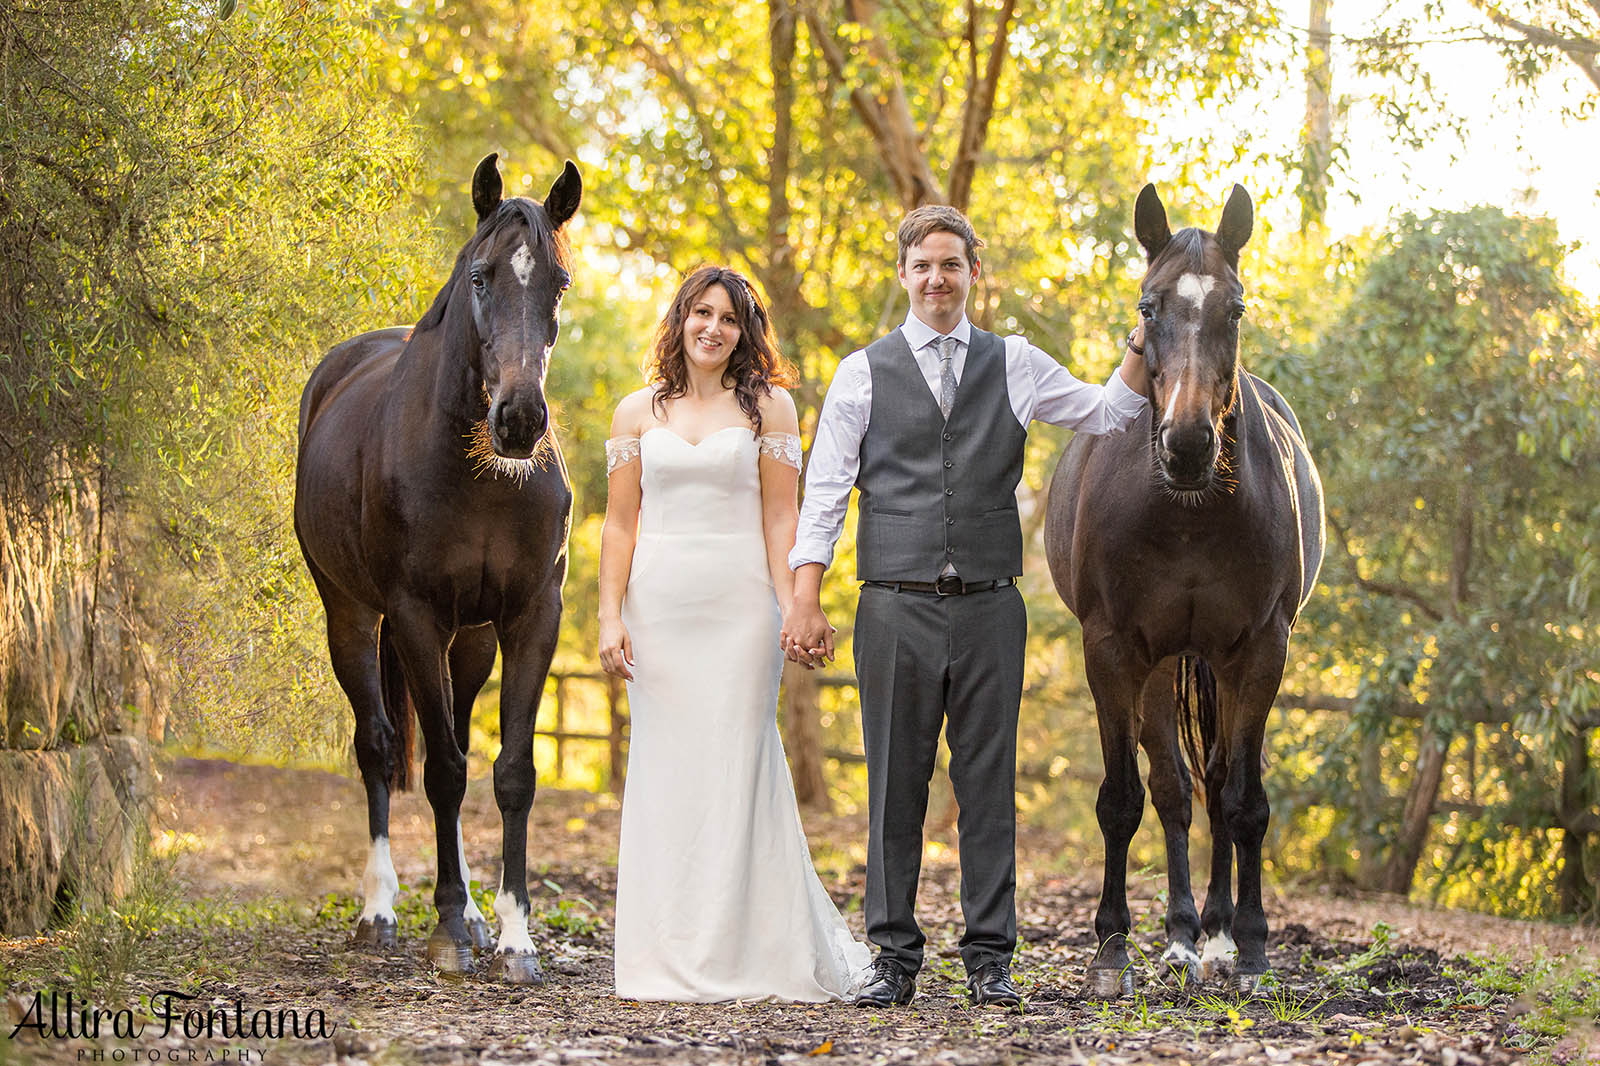 Victoria's wedding photo session at Galston Rural Spots Facility 